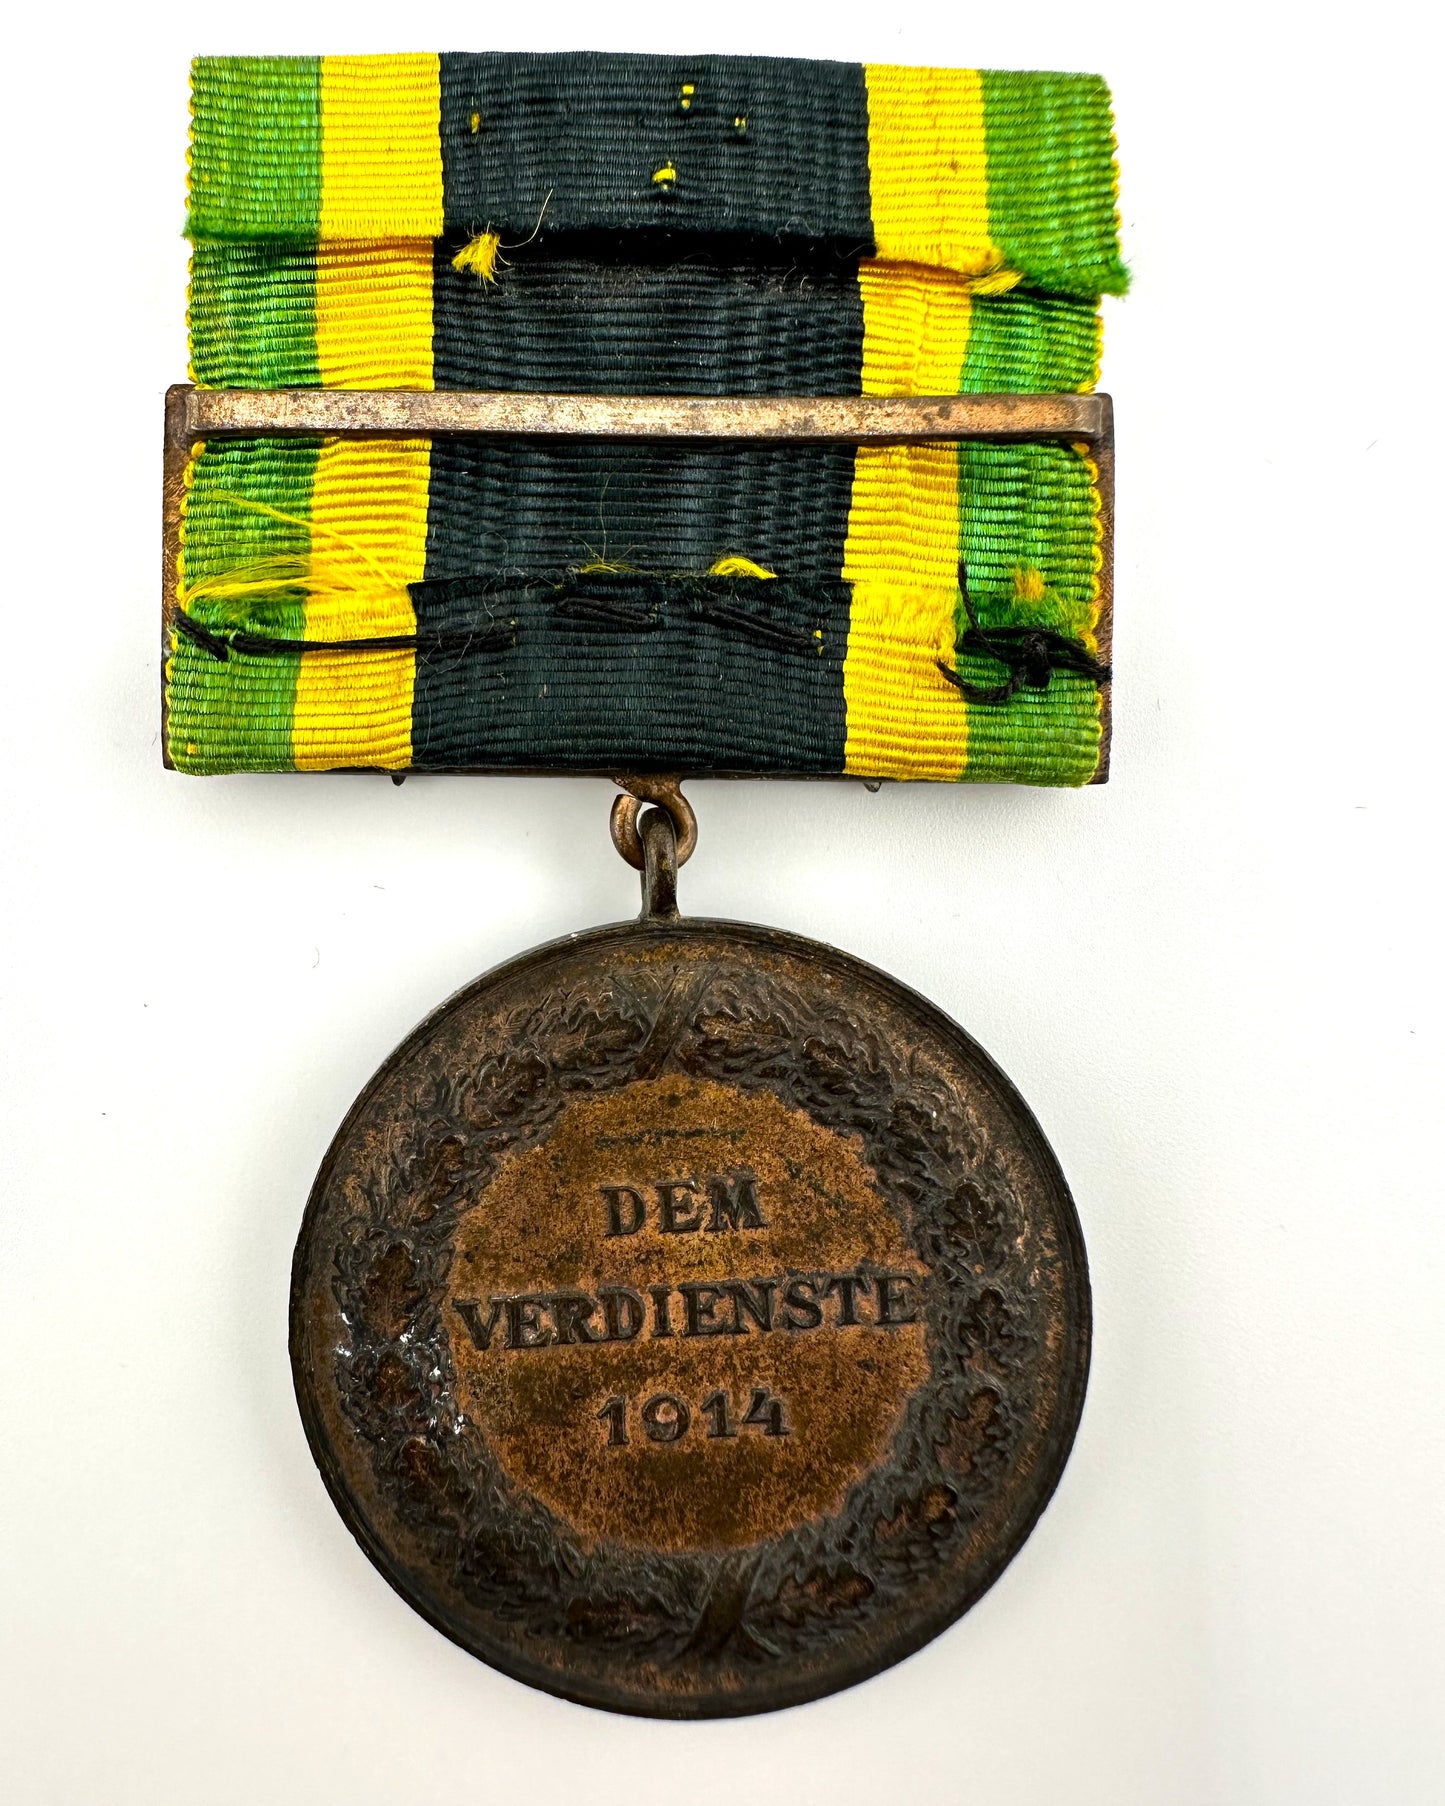 Saxe-Coburg Gotha Wilhelm Ernst Medal with Sword Clasp - 1914 - Derrittmeister Militaria Group